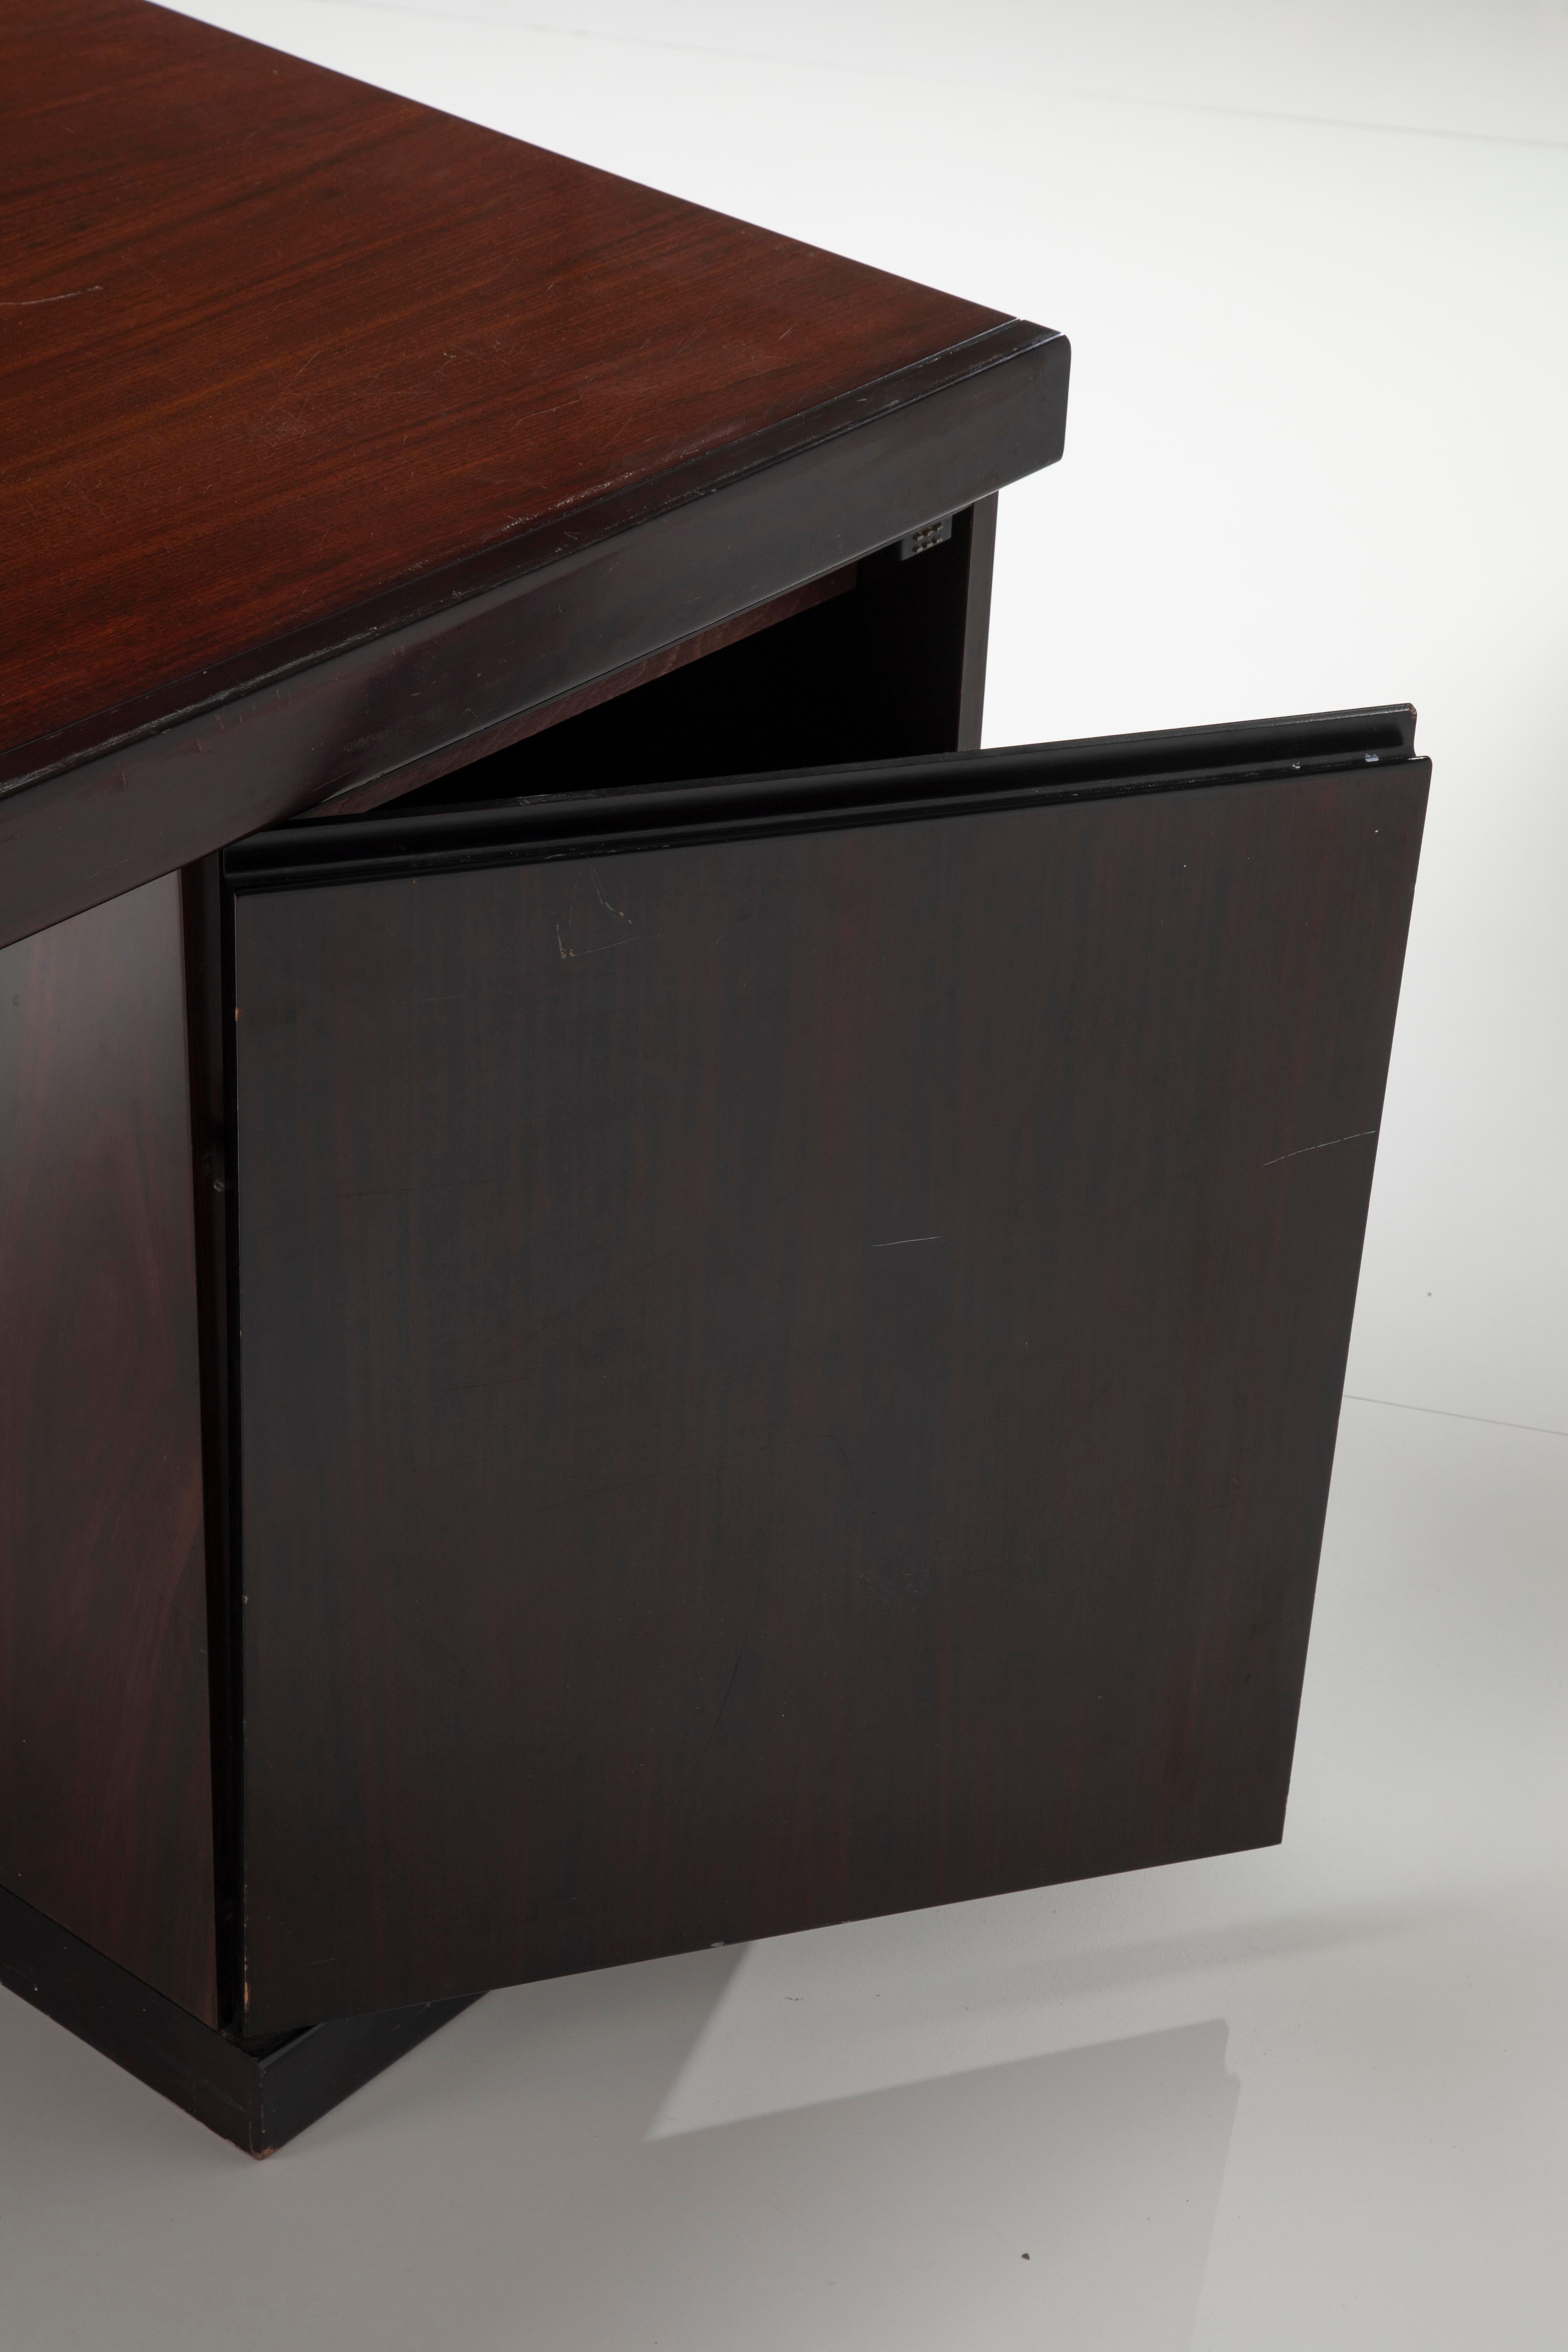 Angelo Mangiarotti Rare desk with single cast iron foot - Italian Design 1970s For Sale 2